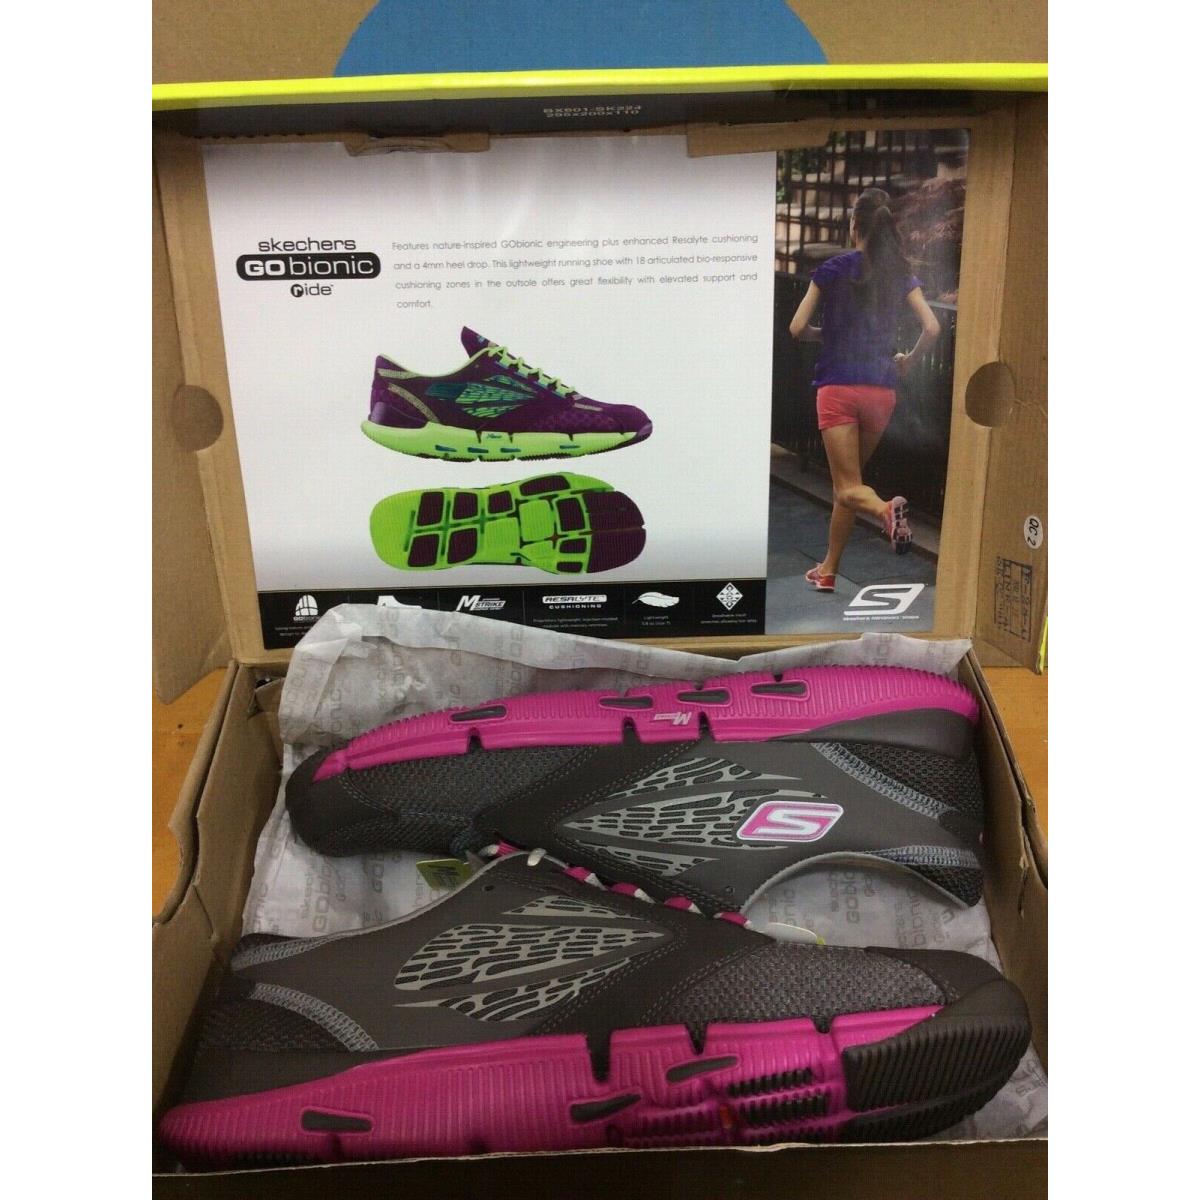 Skechers shoes Bionic Ride - Charcoal Hot Pink 9